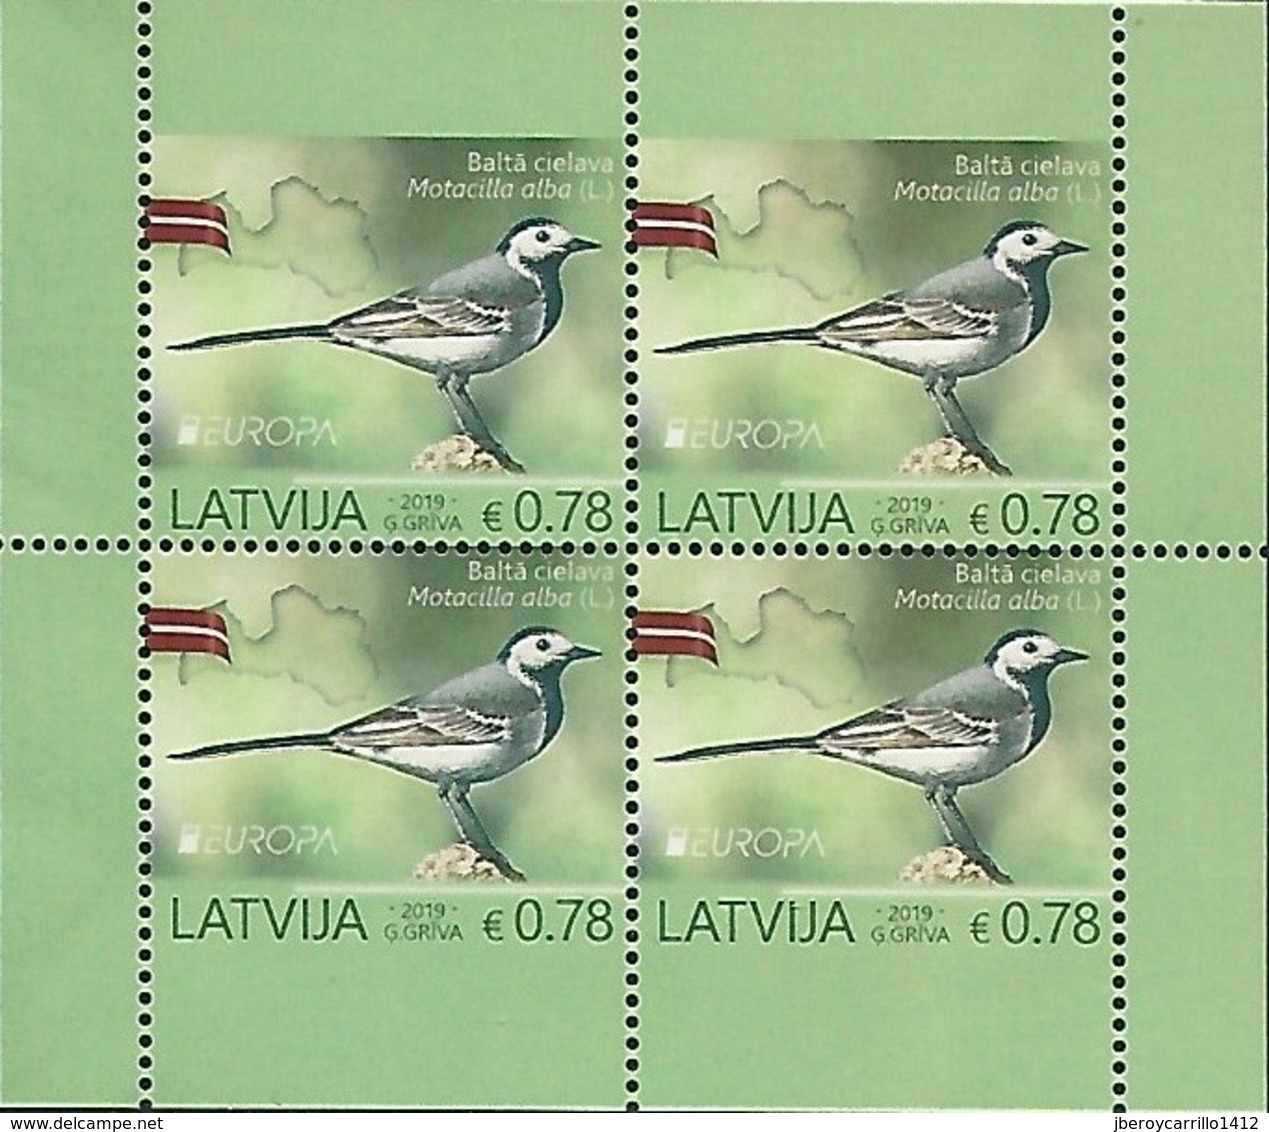 LETONIA /LATVIA /LETTLAND /LETTONIE -EUROPA 2019 -NATIONAL BIRDS.-"AVES - BIRDS -VÖGEL -OISEAUX"-PANE CARNET FERIA ESSEN - 2019